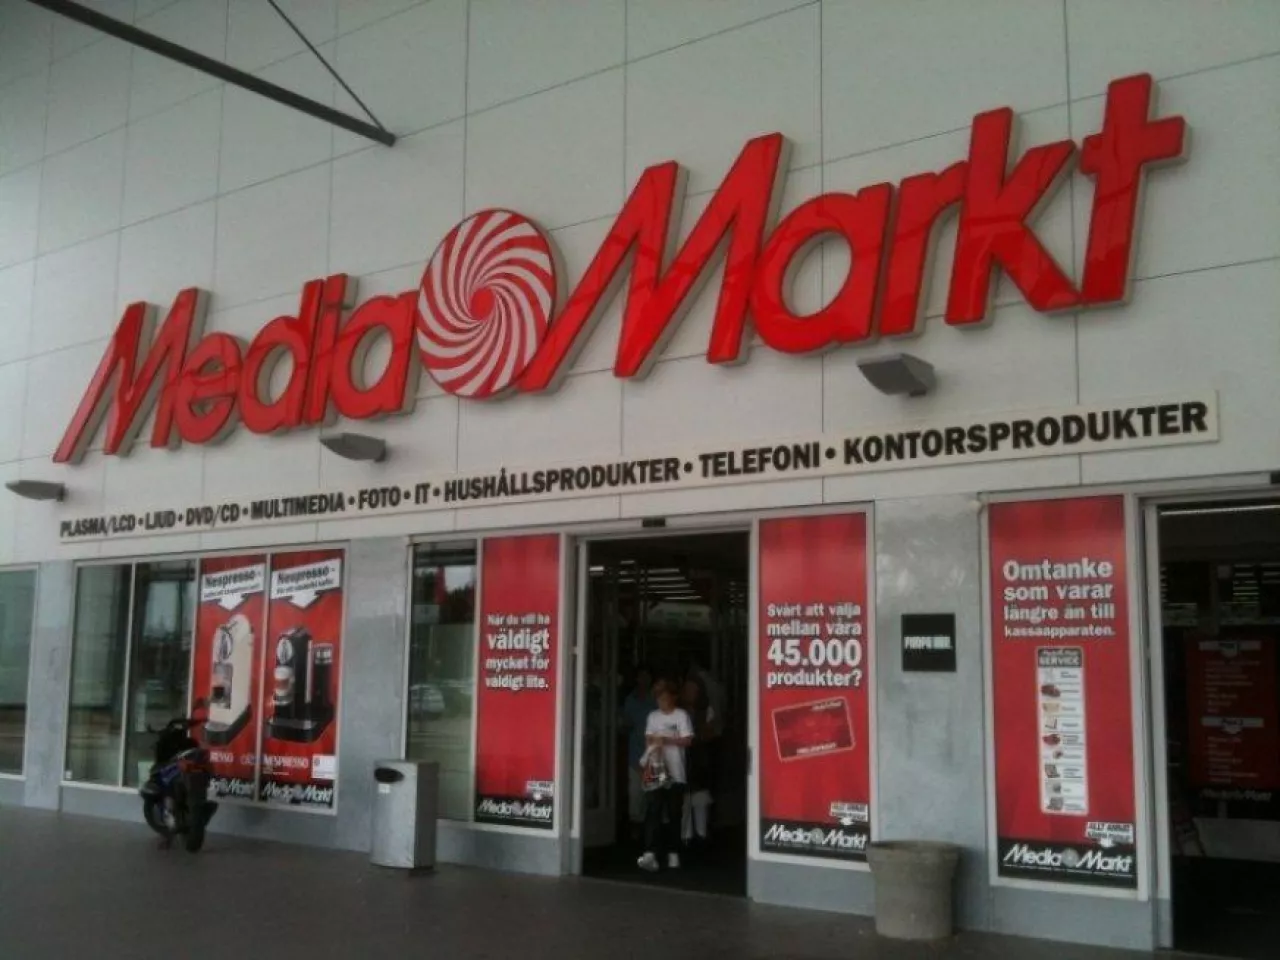 MediaMarkt (fot. By Gaisjonke (Own work) [CC BY 3.0 (http://creativecommons.org/licenses/by/3.0)], via Wikimedia Commons)